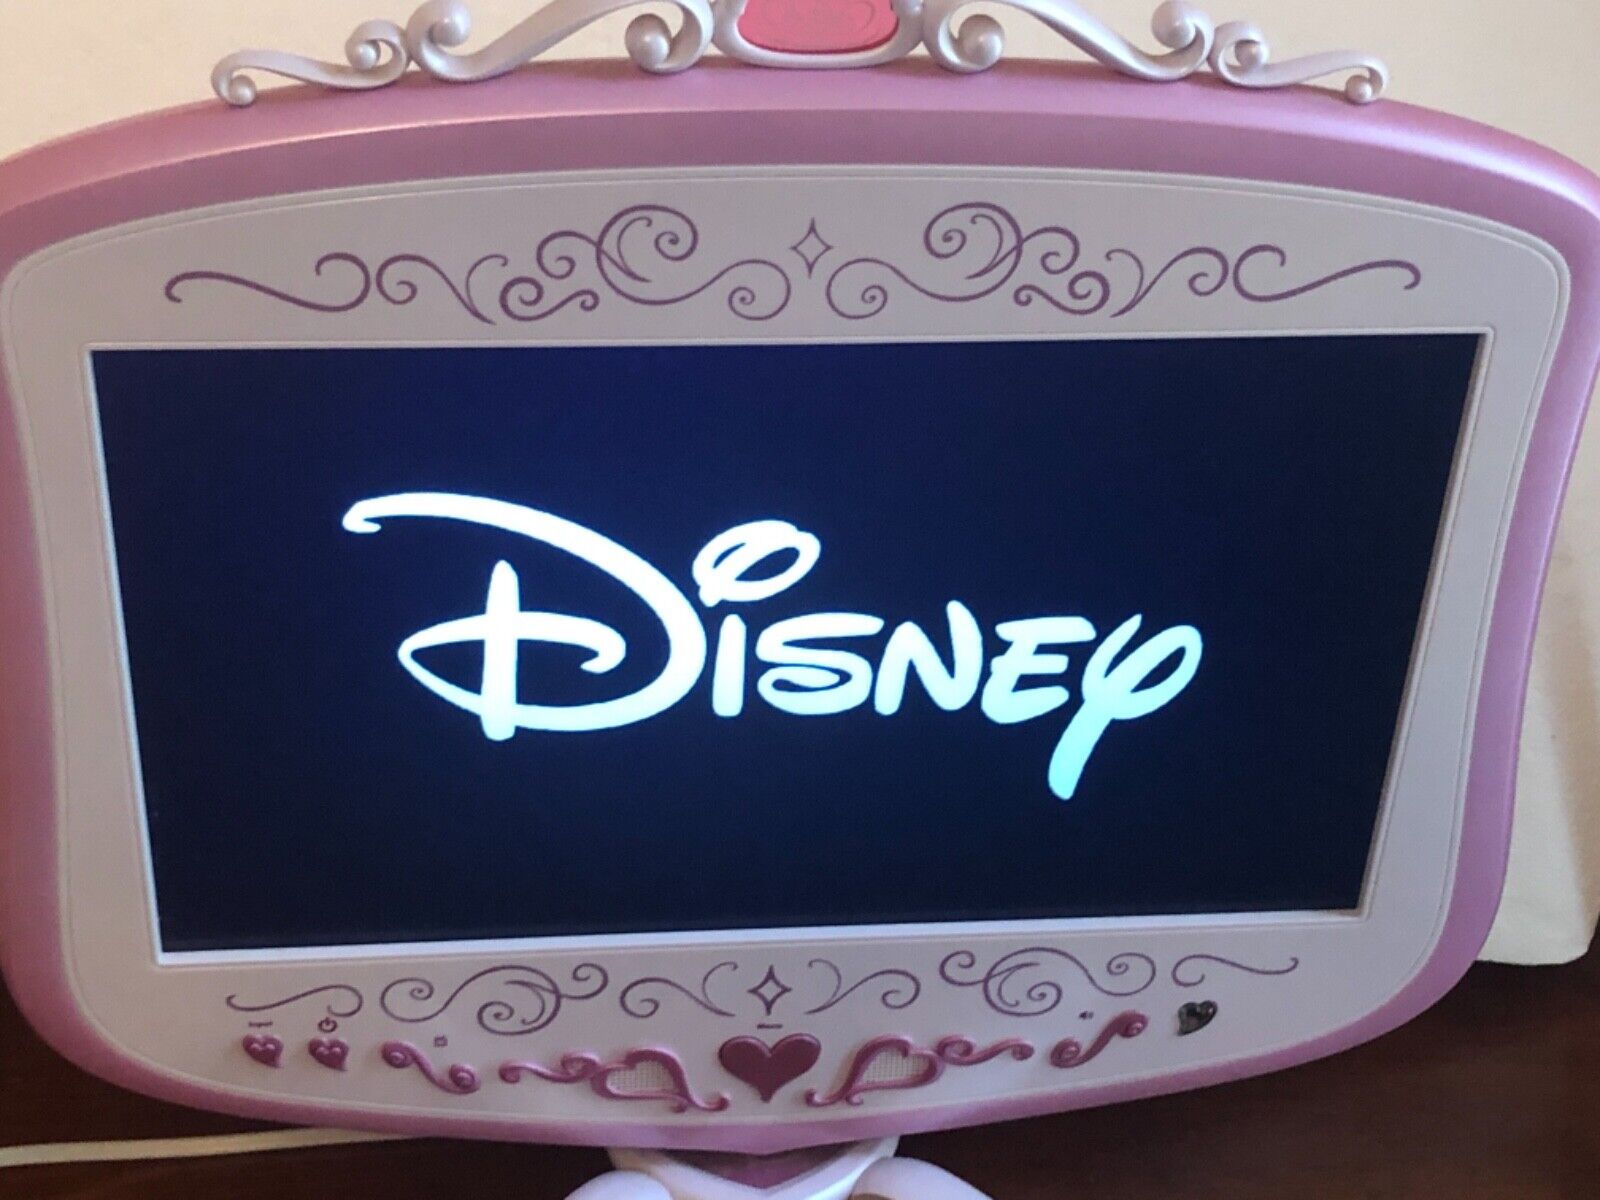 Disney Princess TV 15” LCD flat screen Computer Monitor Tested  Works